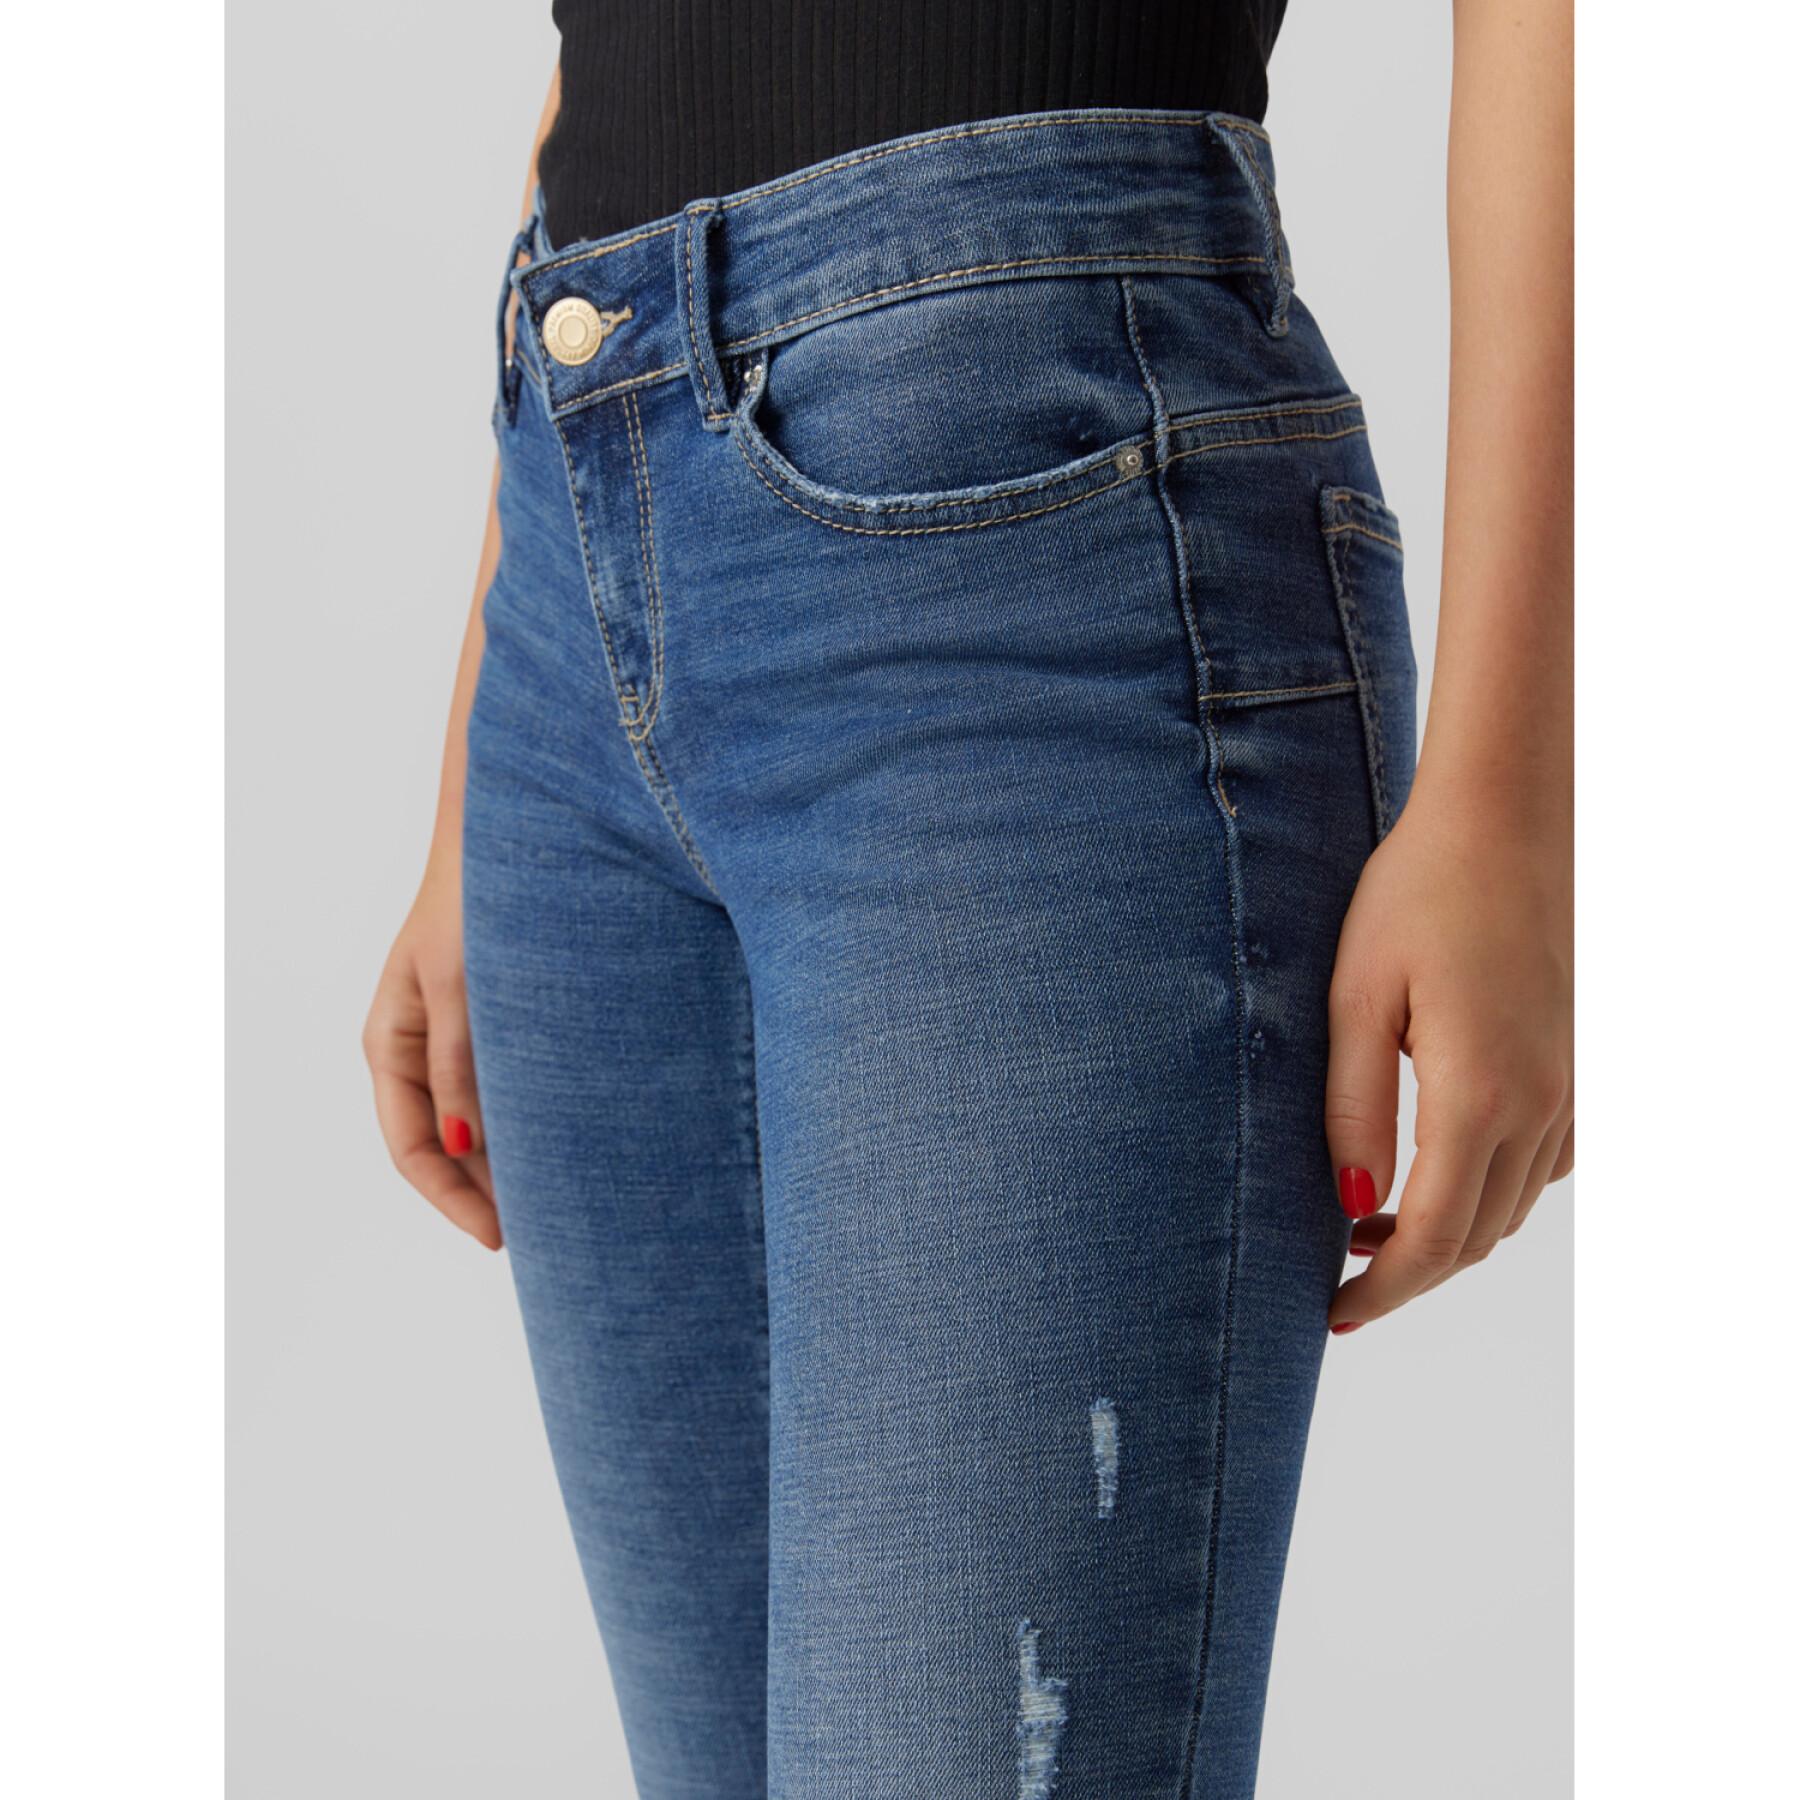 Jeans skinny frau Vero Moda Robyn LR Push Up LI399